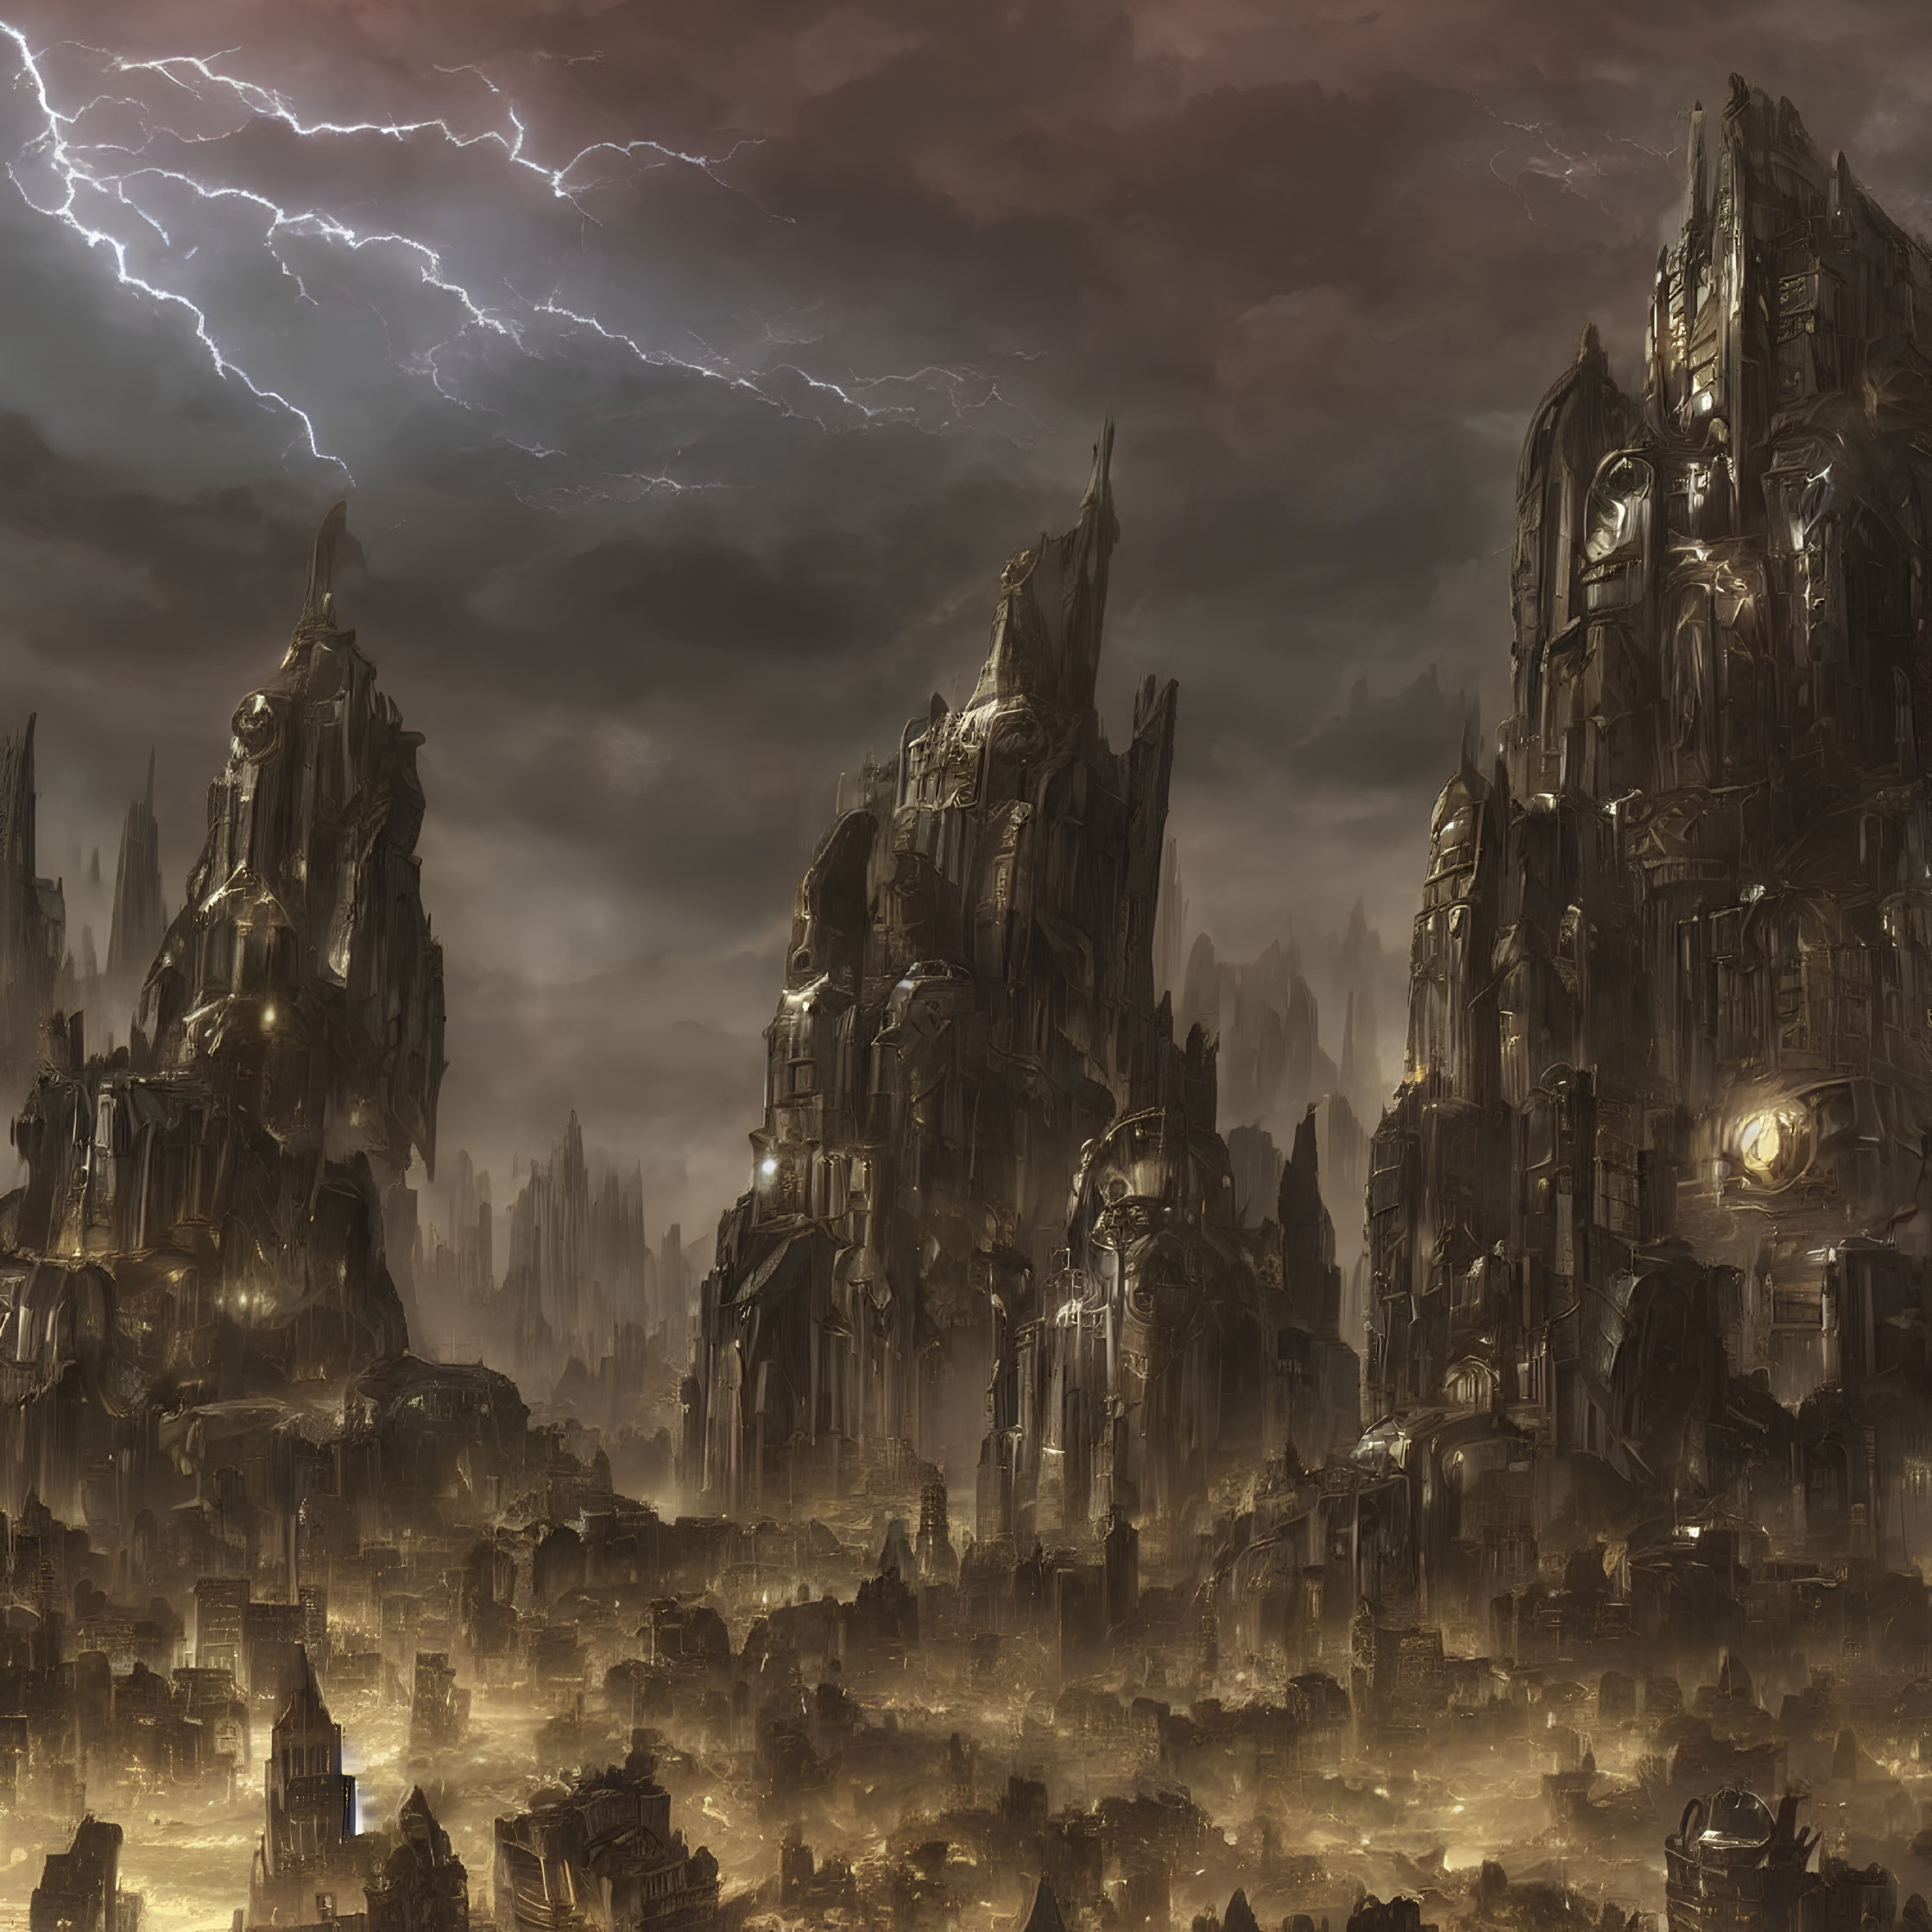 Dark Gothic Spires in Stormy Fantasy Cityscape